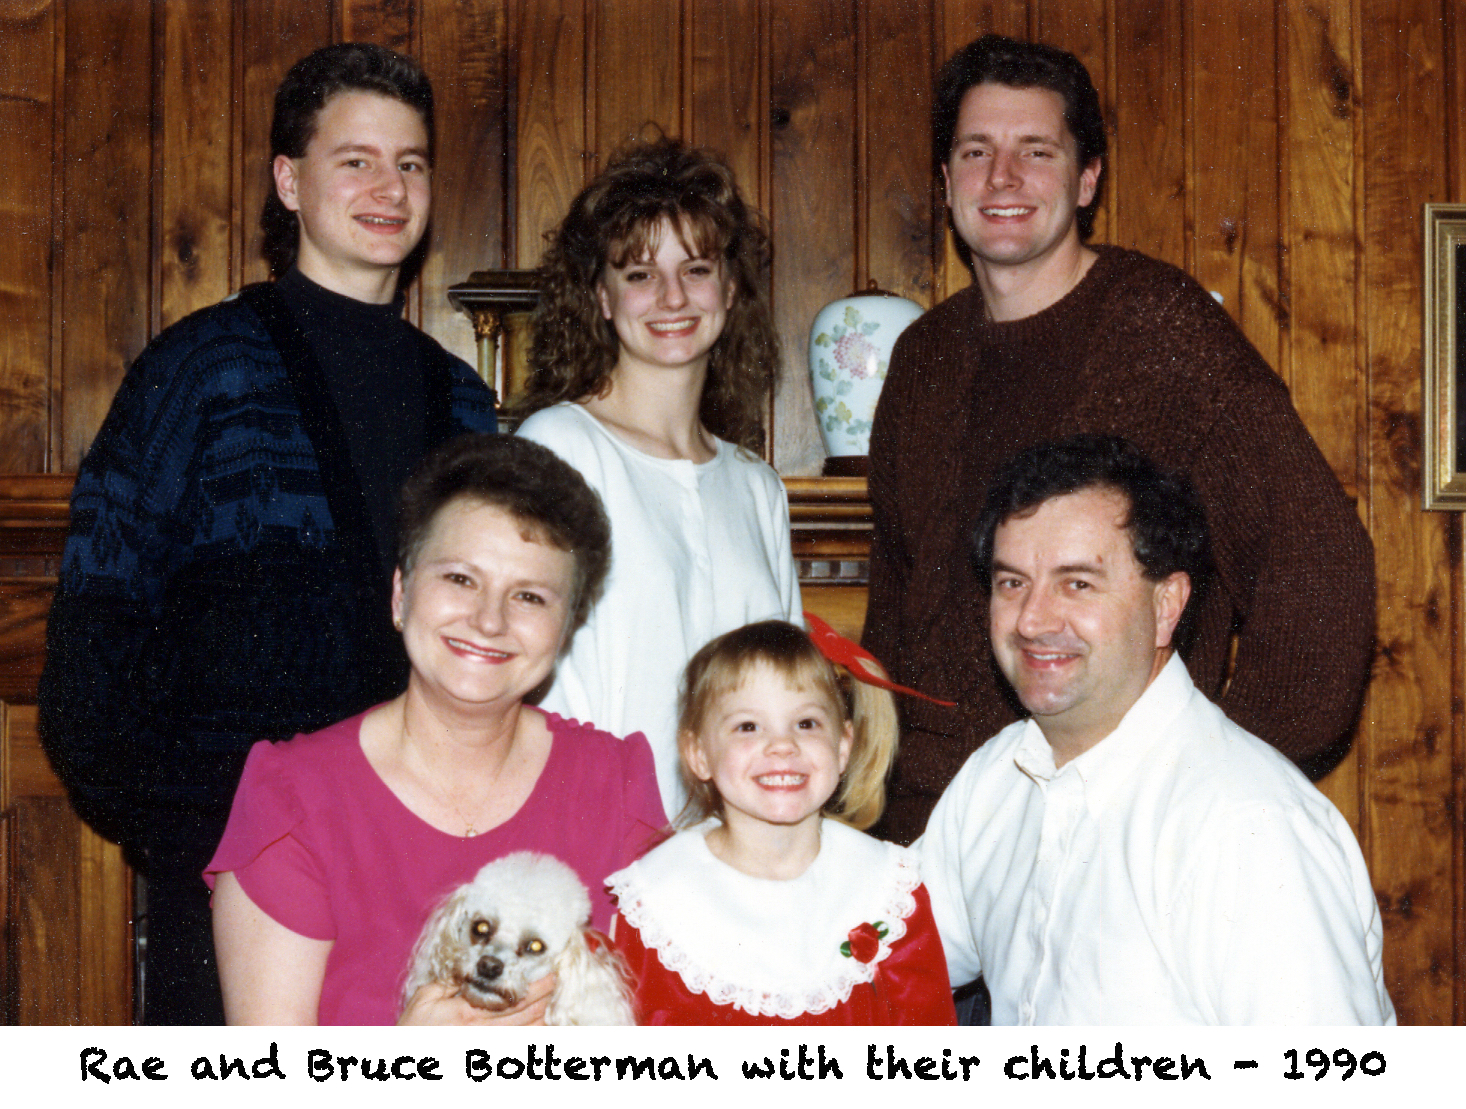 The Botterman family’s Christmas photo for 1990